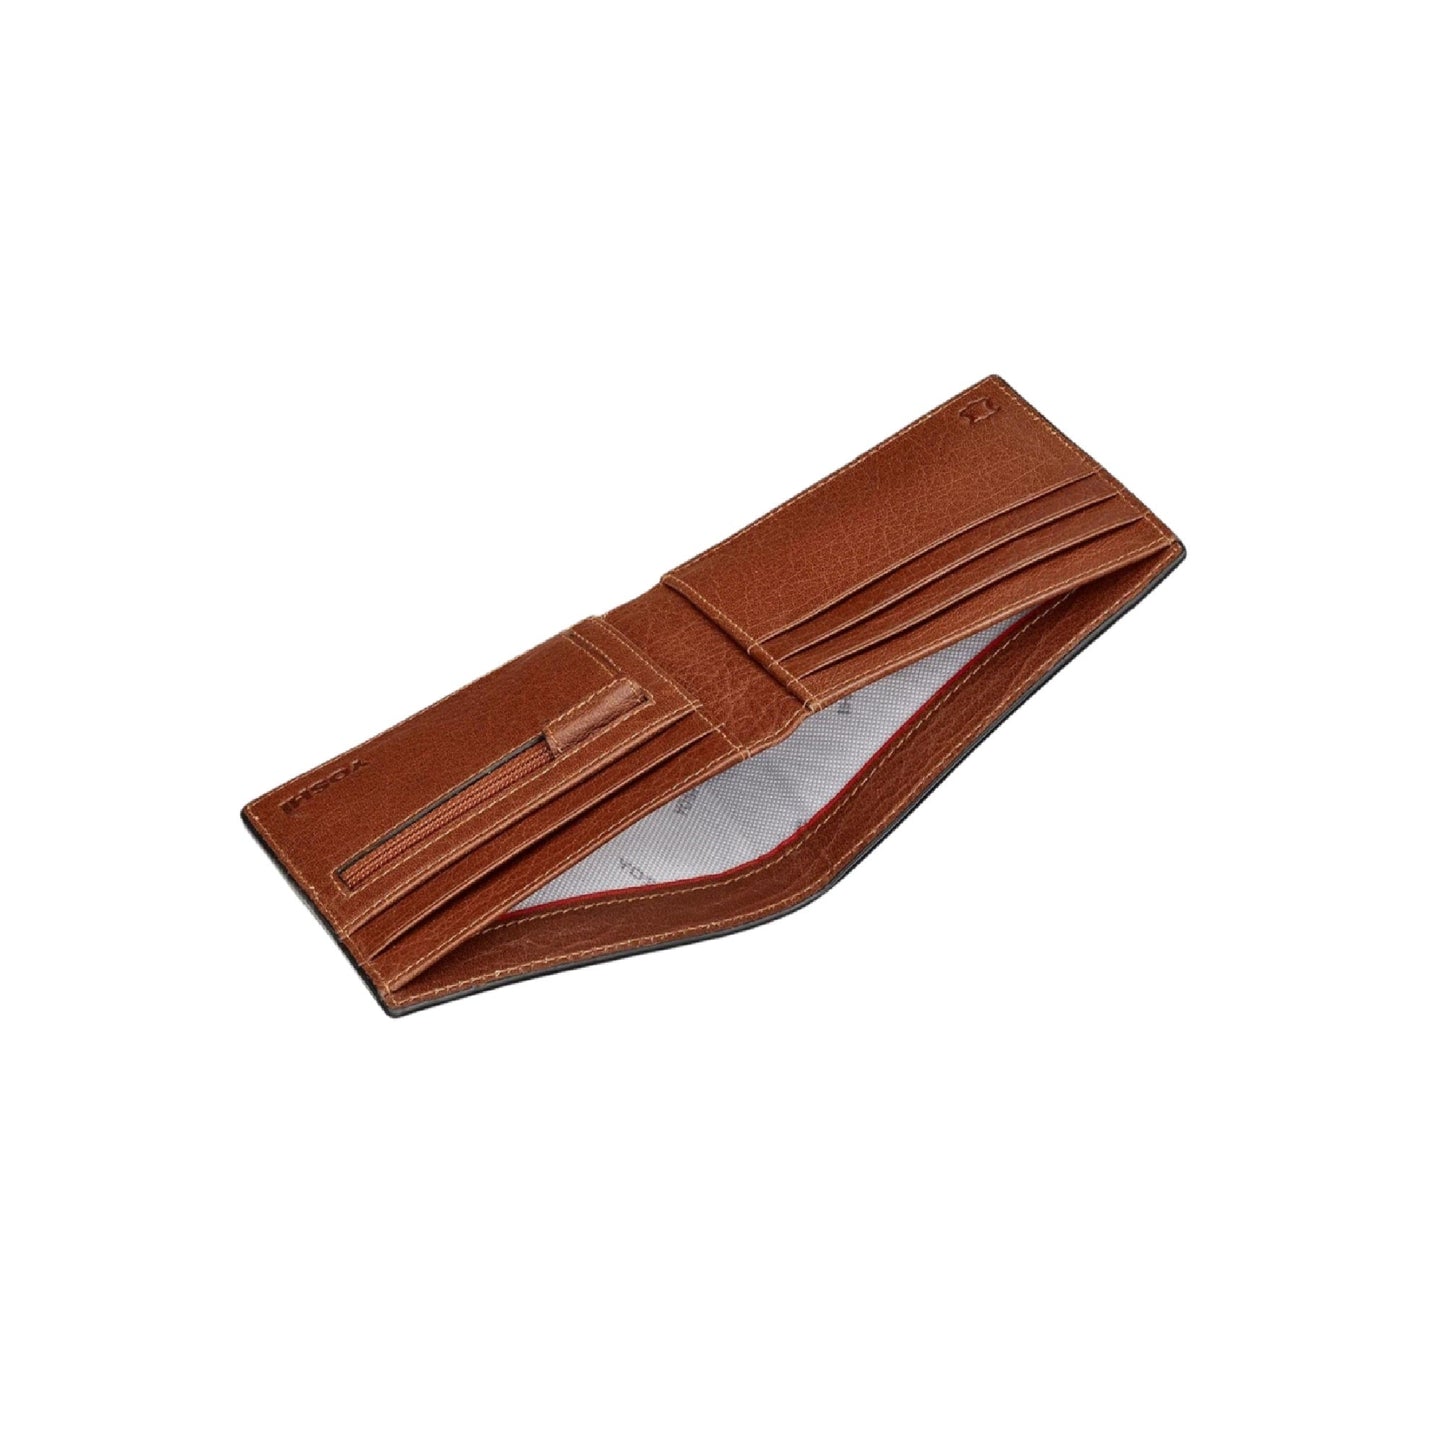 MOD Target Men's Leather Wallet - Brown